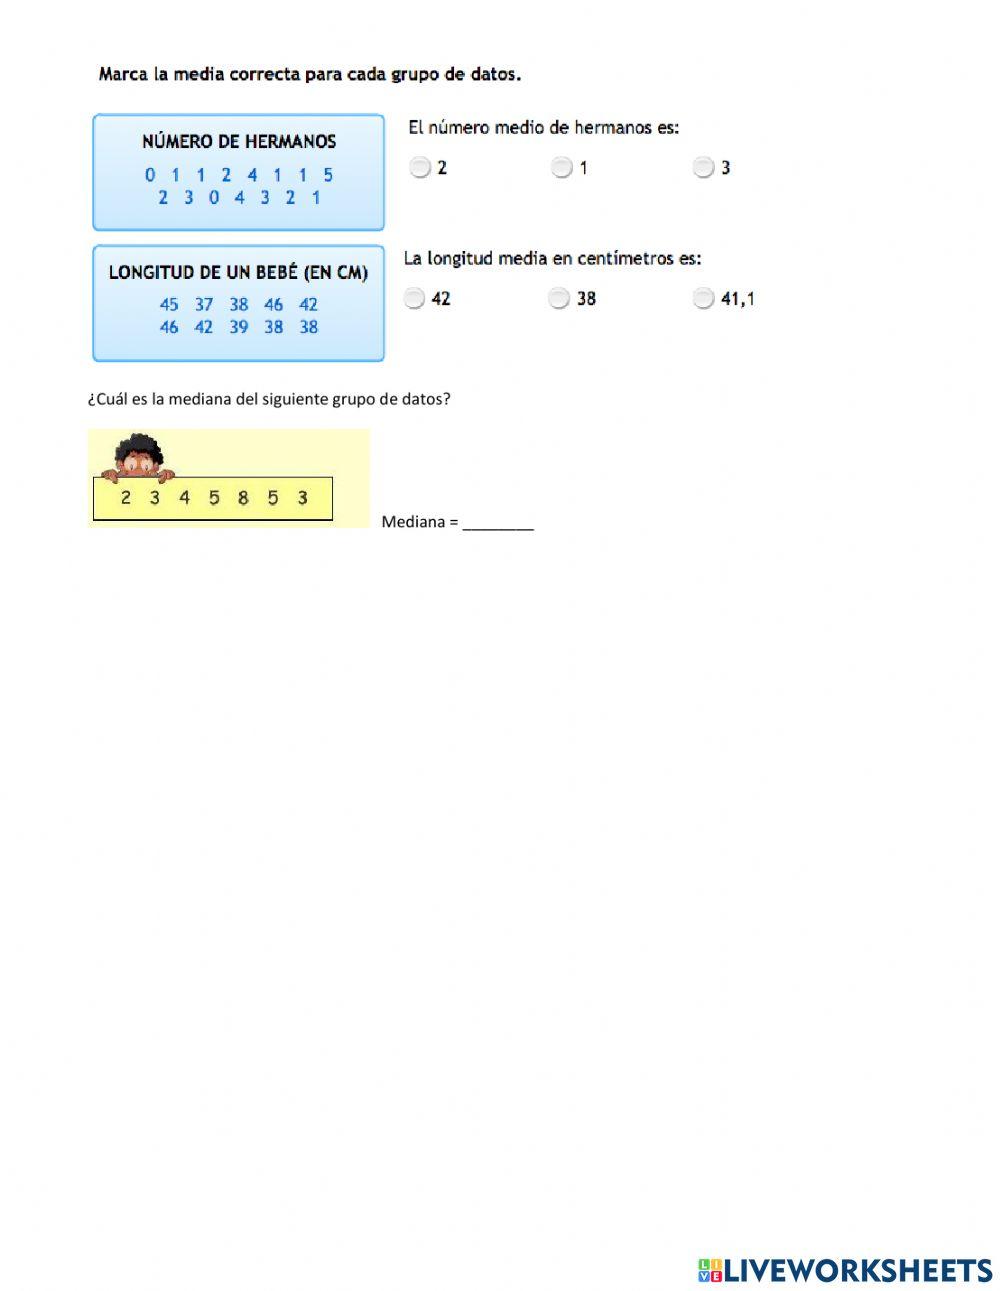 Examen de matematica del segundo quimestre - sexto de basica